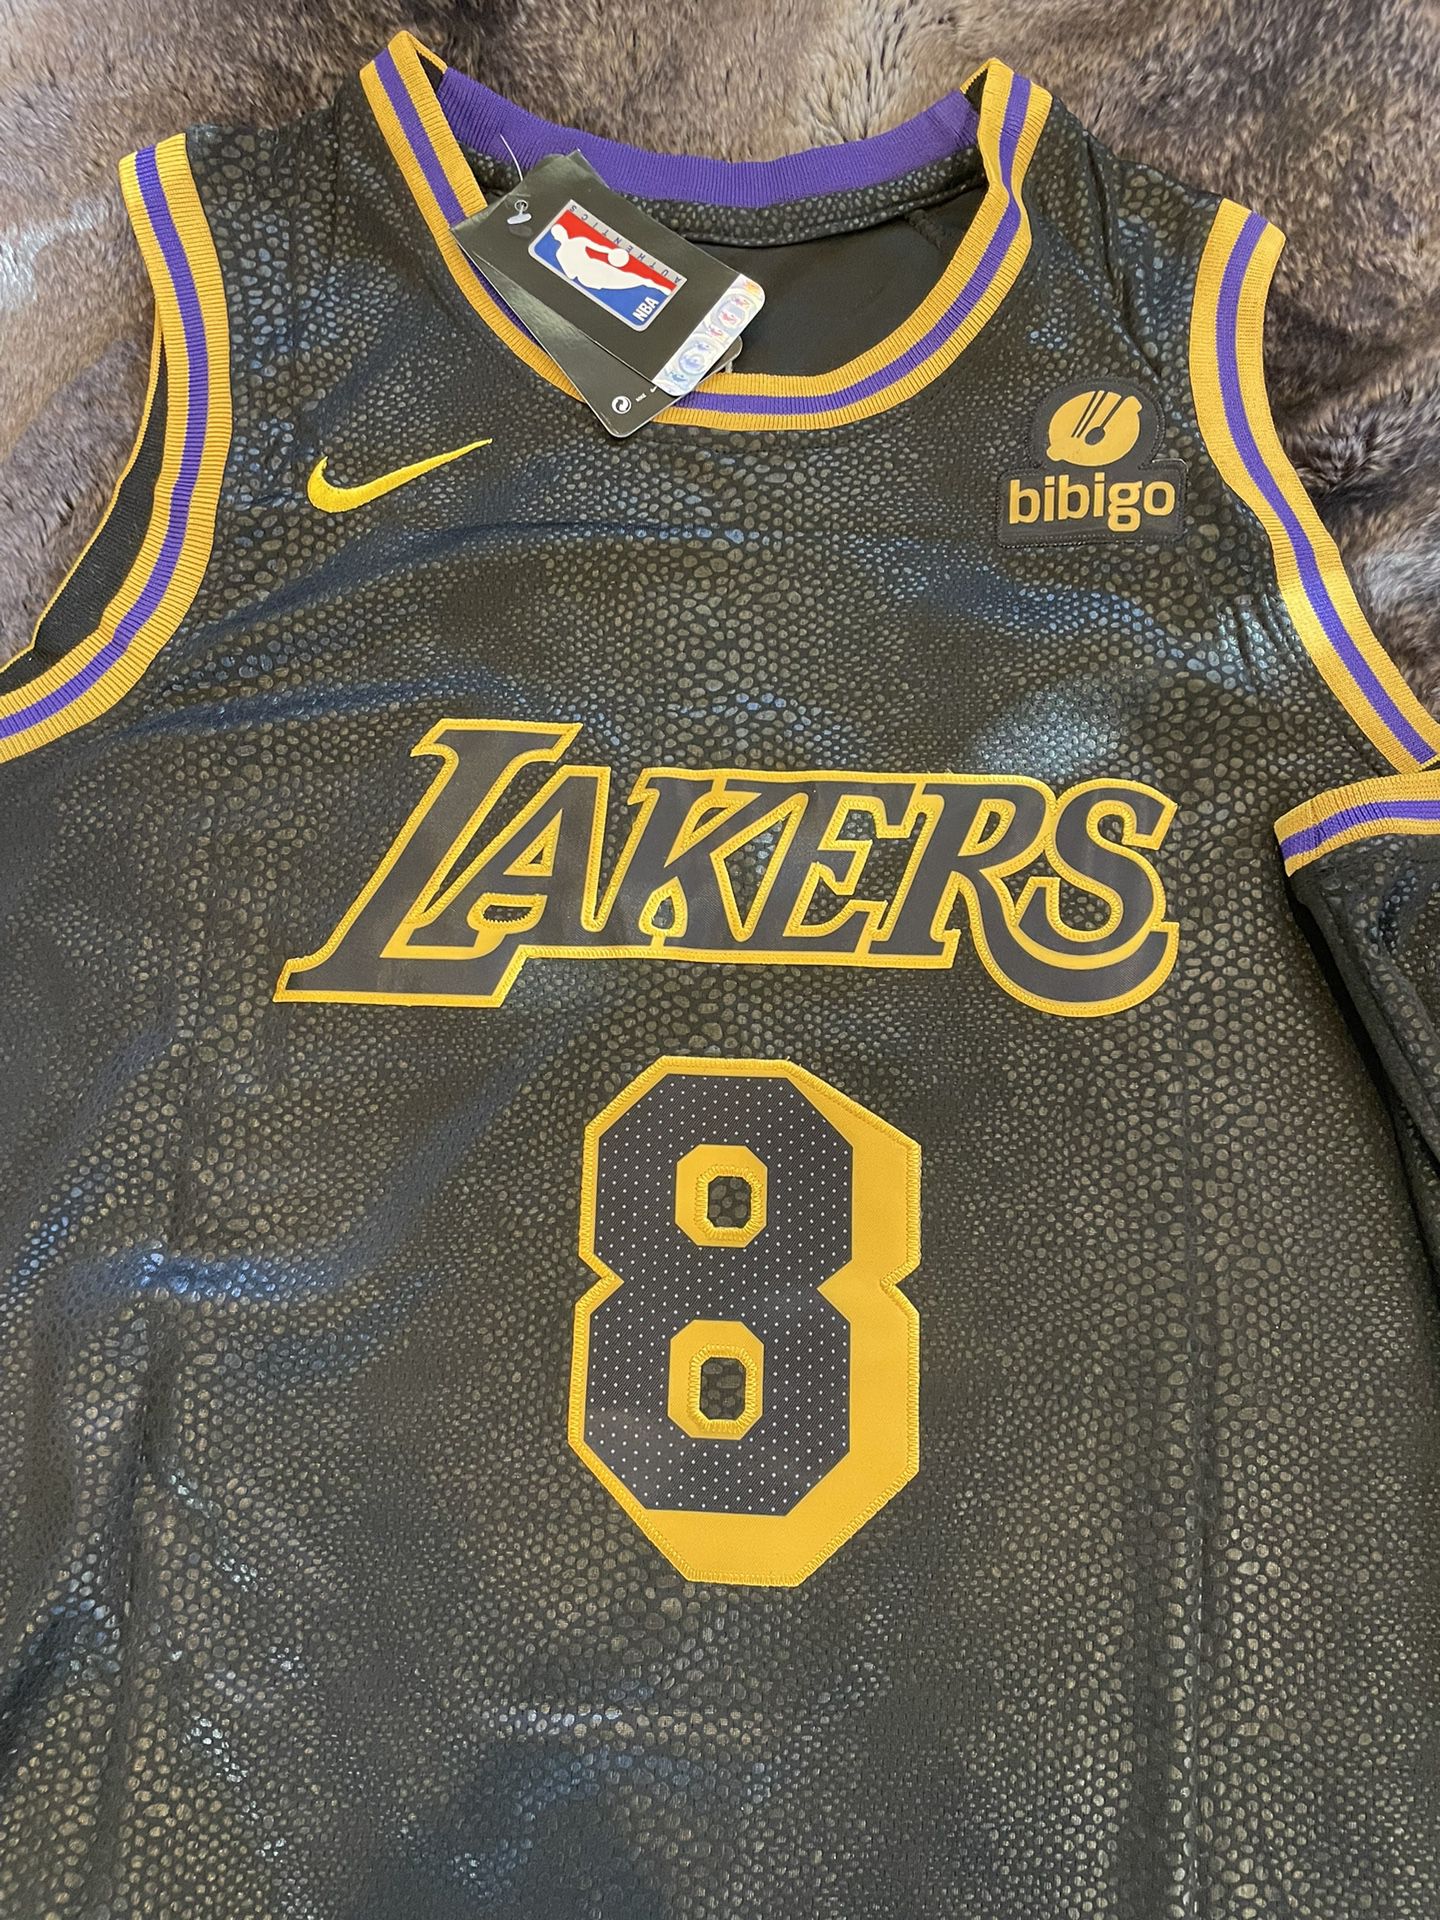 Kobe Bryant Lakers Black Mamba Jersey for Sale in Hayward, CA